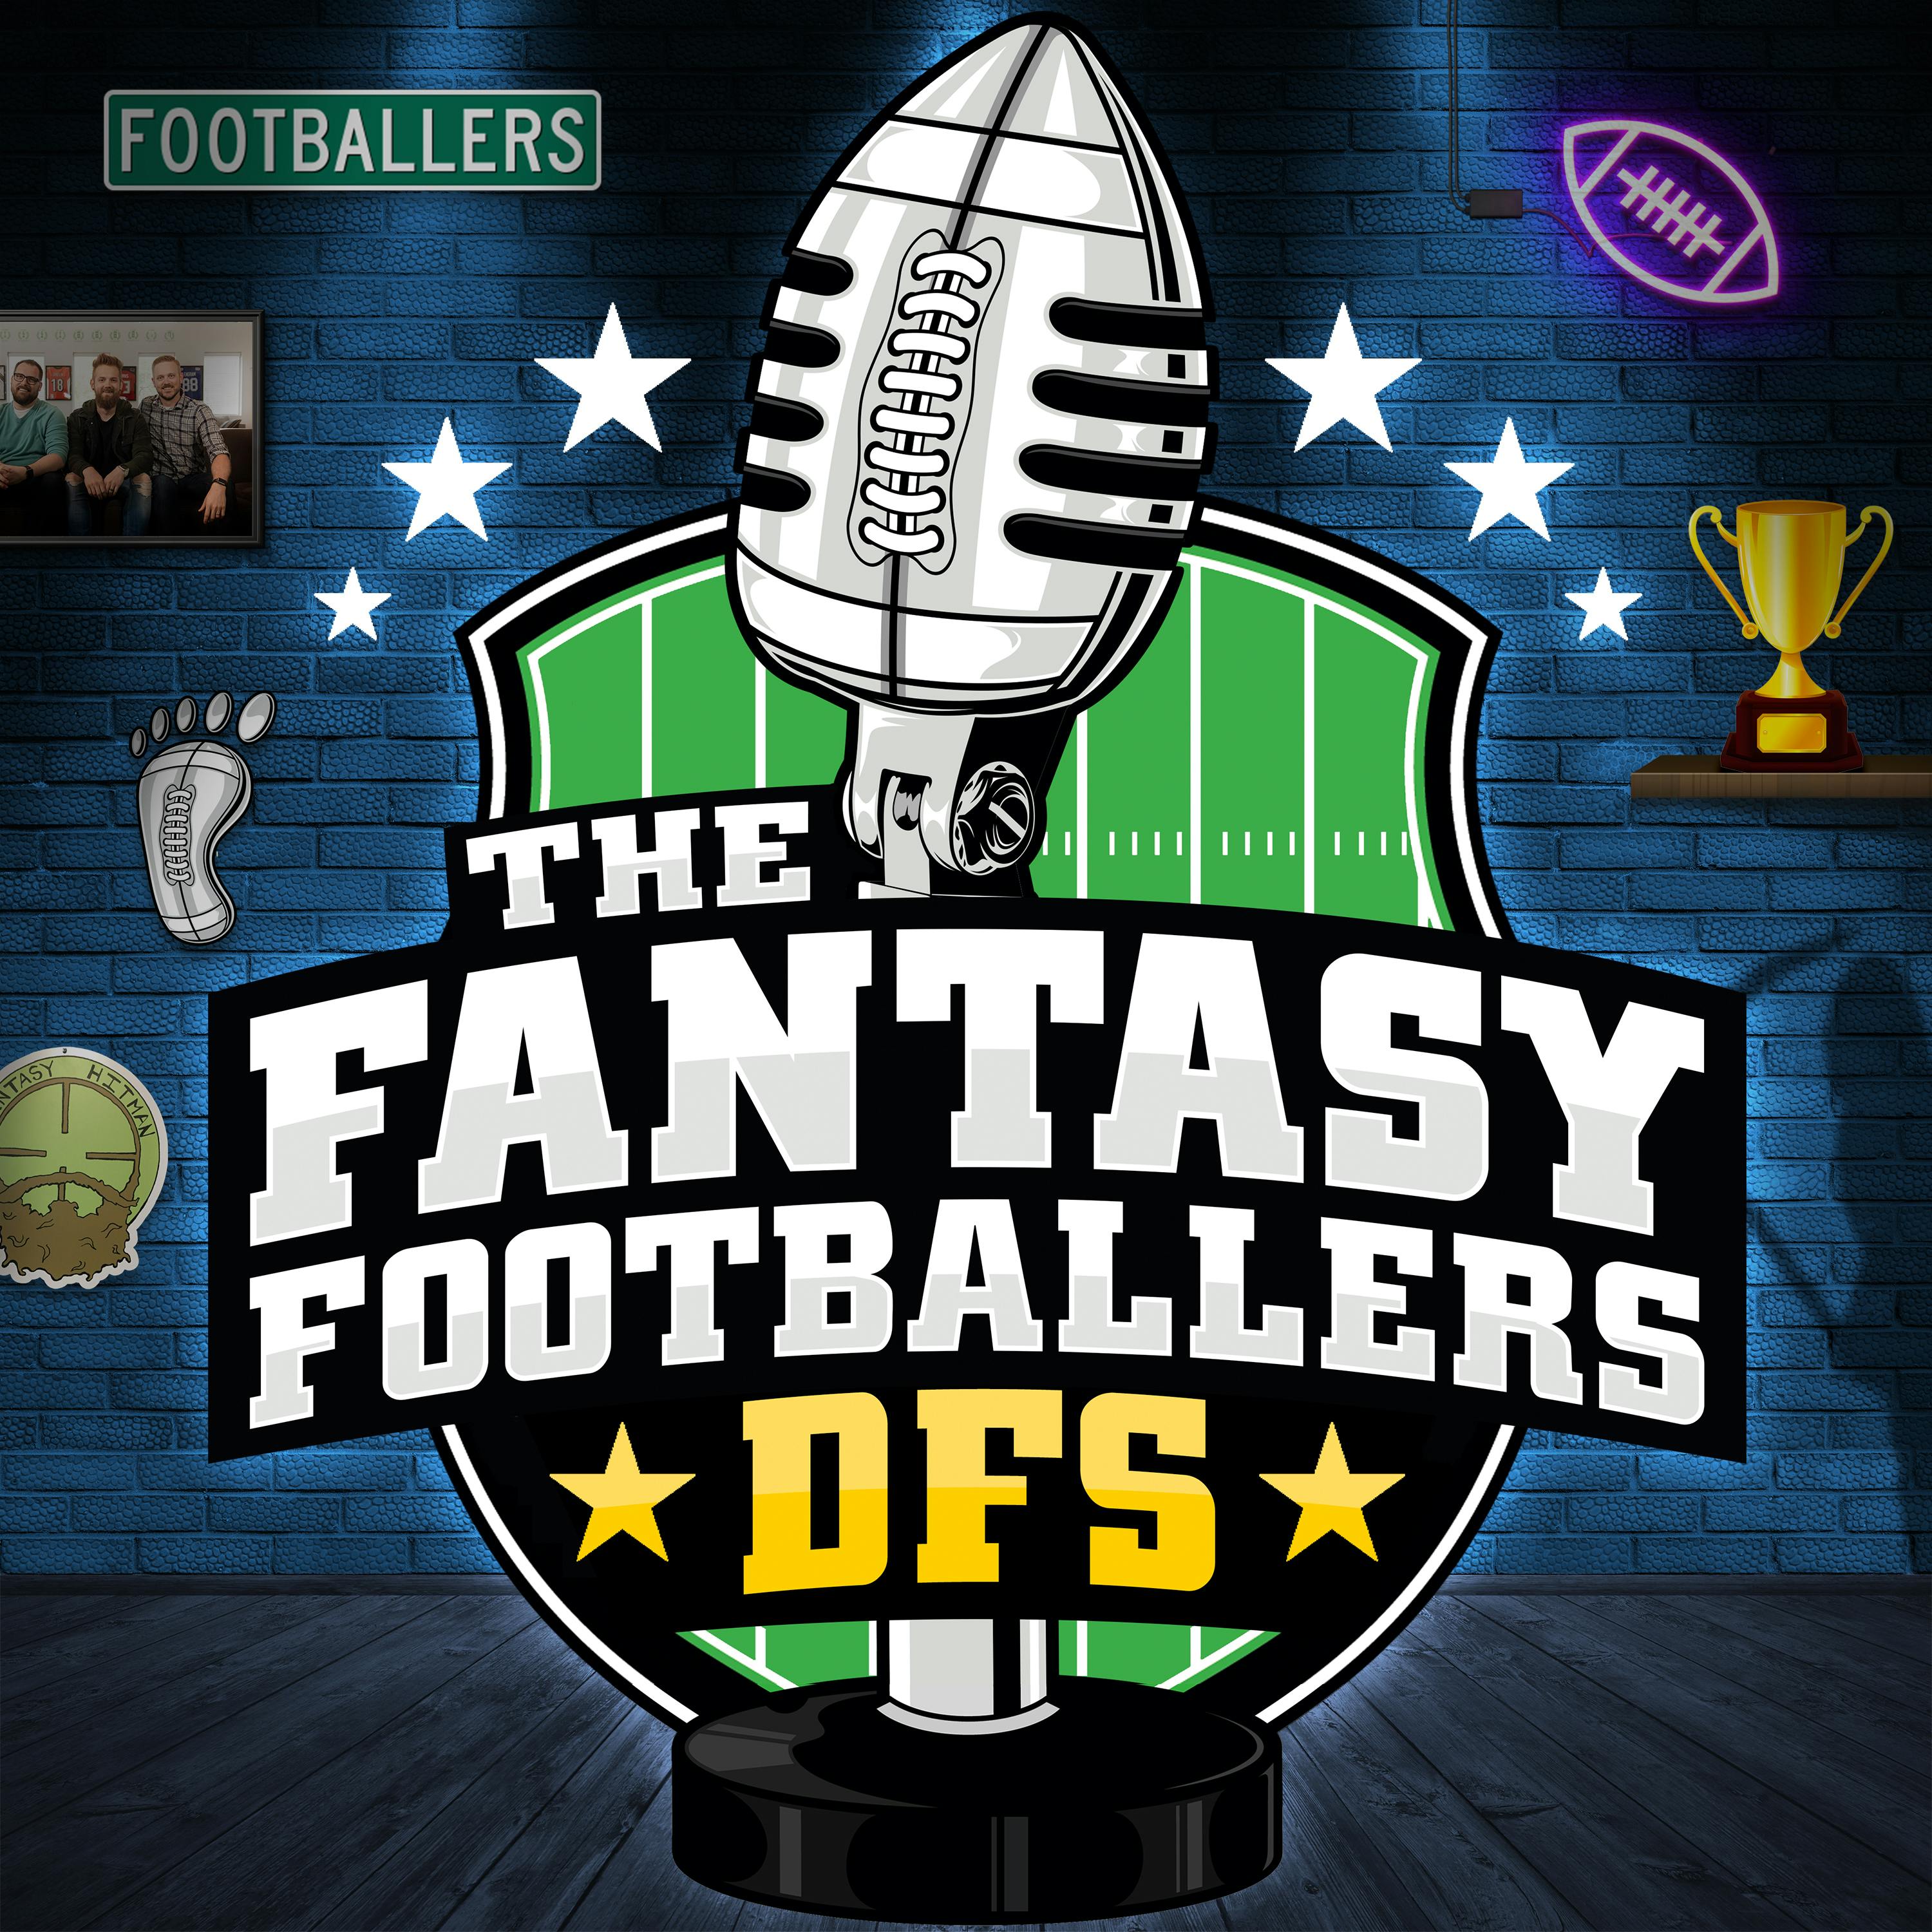 DFS Week 18 Main Slate + Cash/GPP Picks - Fantasy Football DFS